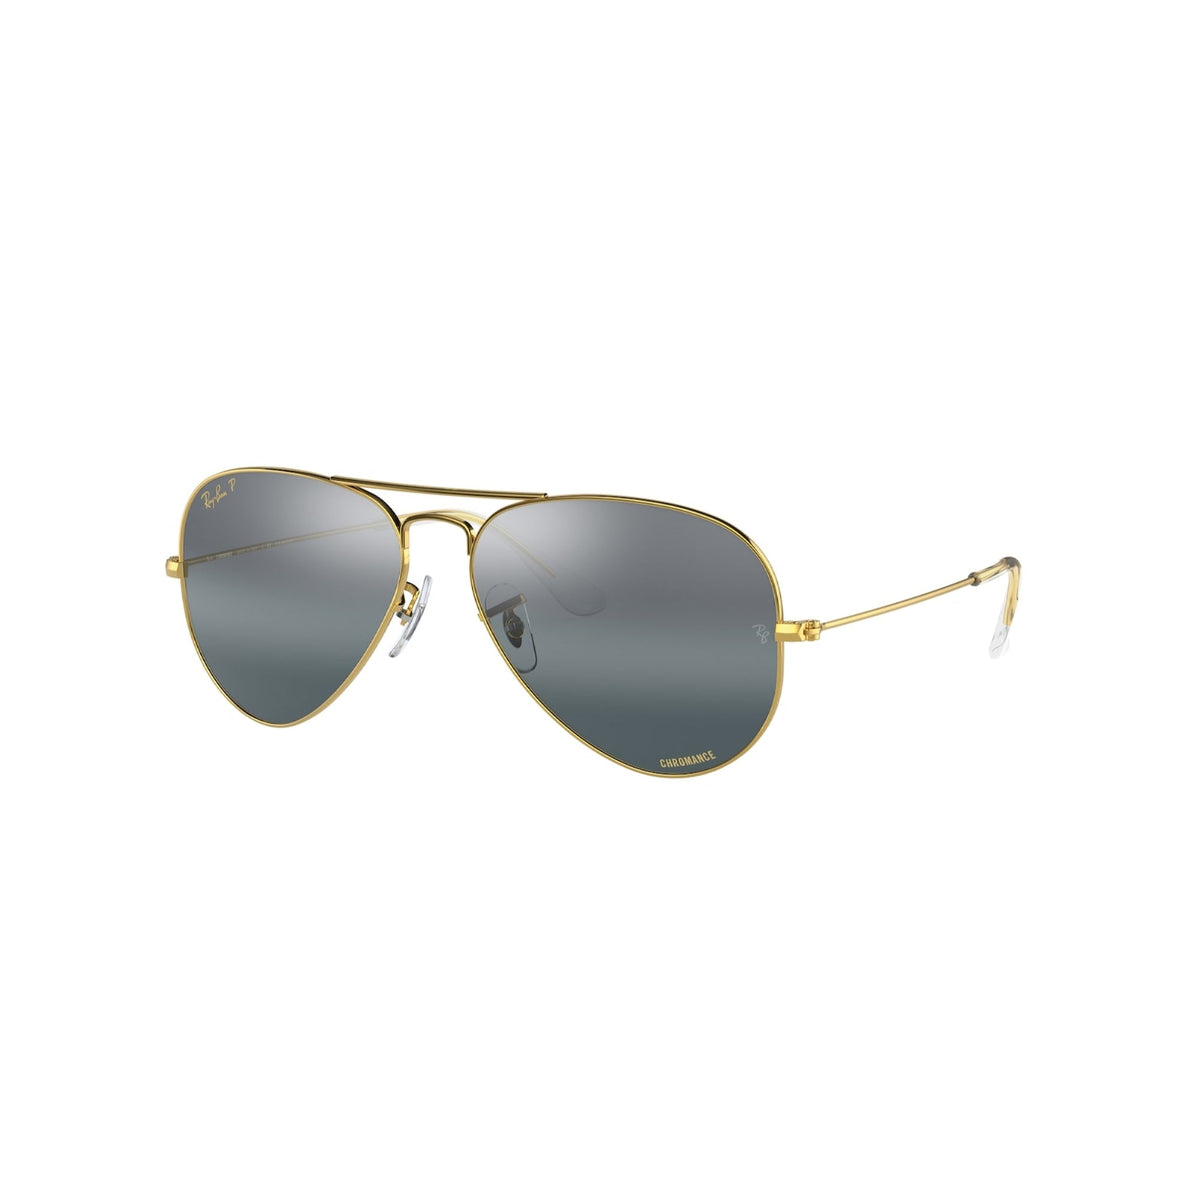 Ray-Ban Unisex Sunglasses Aviator large Metal Gold Polar Clear Gradient Dark Blue Metal Metal  0RB3025 9196G6 55